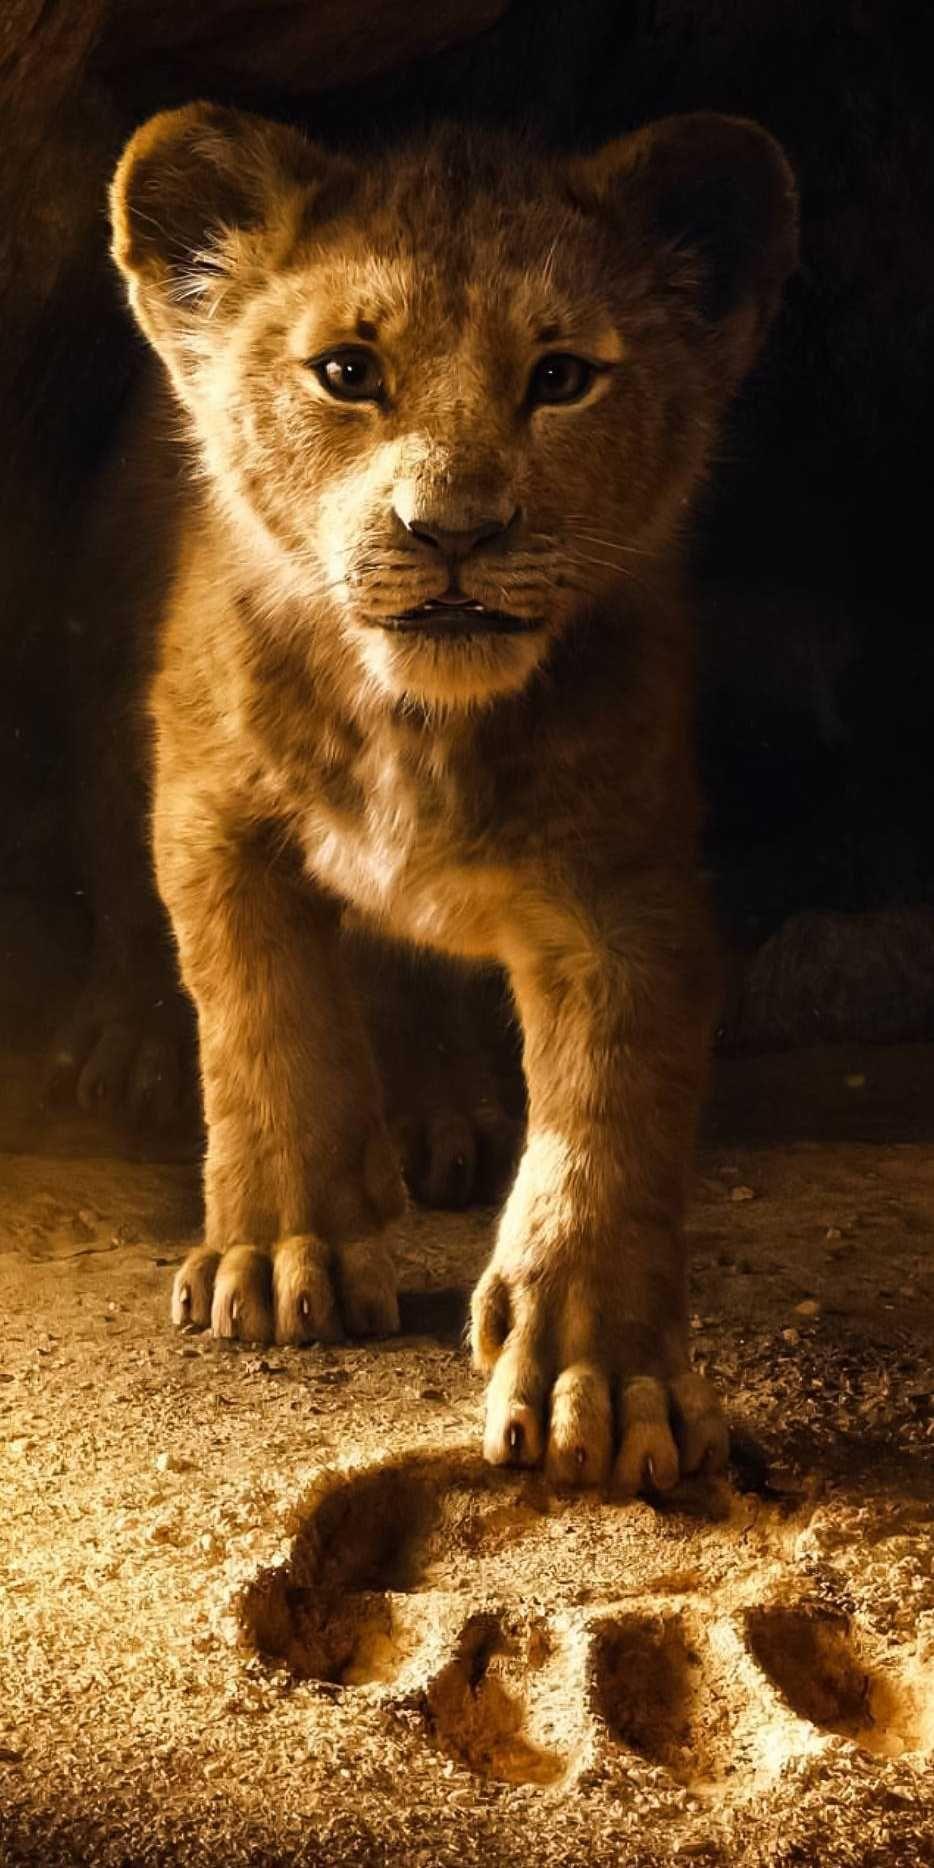 The Lion King iPhone Wallpaper. Photography en 2019. Wallpaper